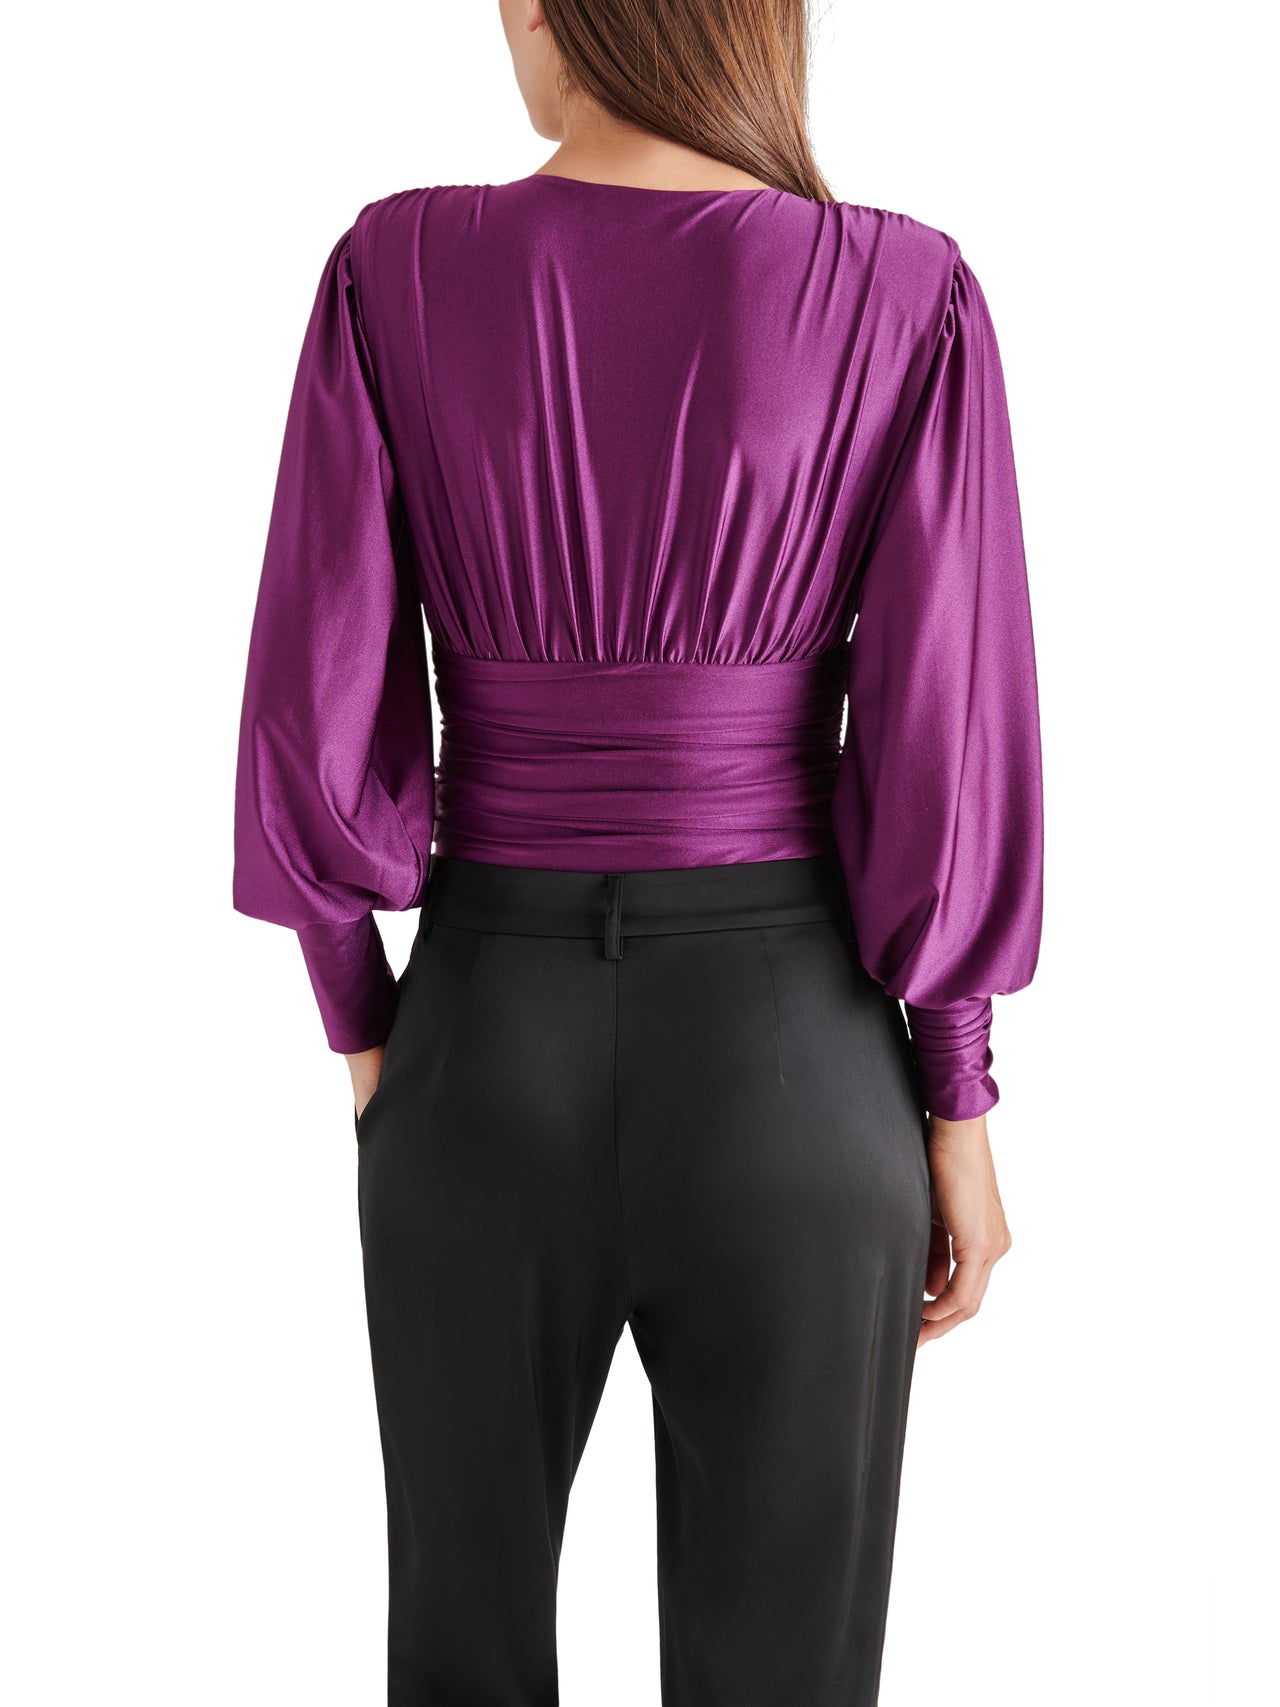 Kali Plum Long Sleeve Deep V Bodysuit, Long Blouse by Steve Madden | LIT Boutique